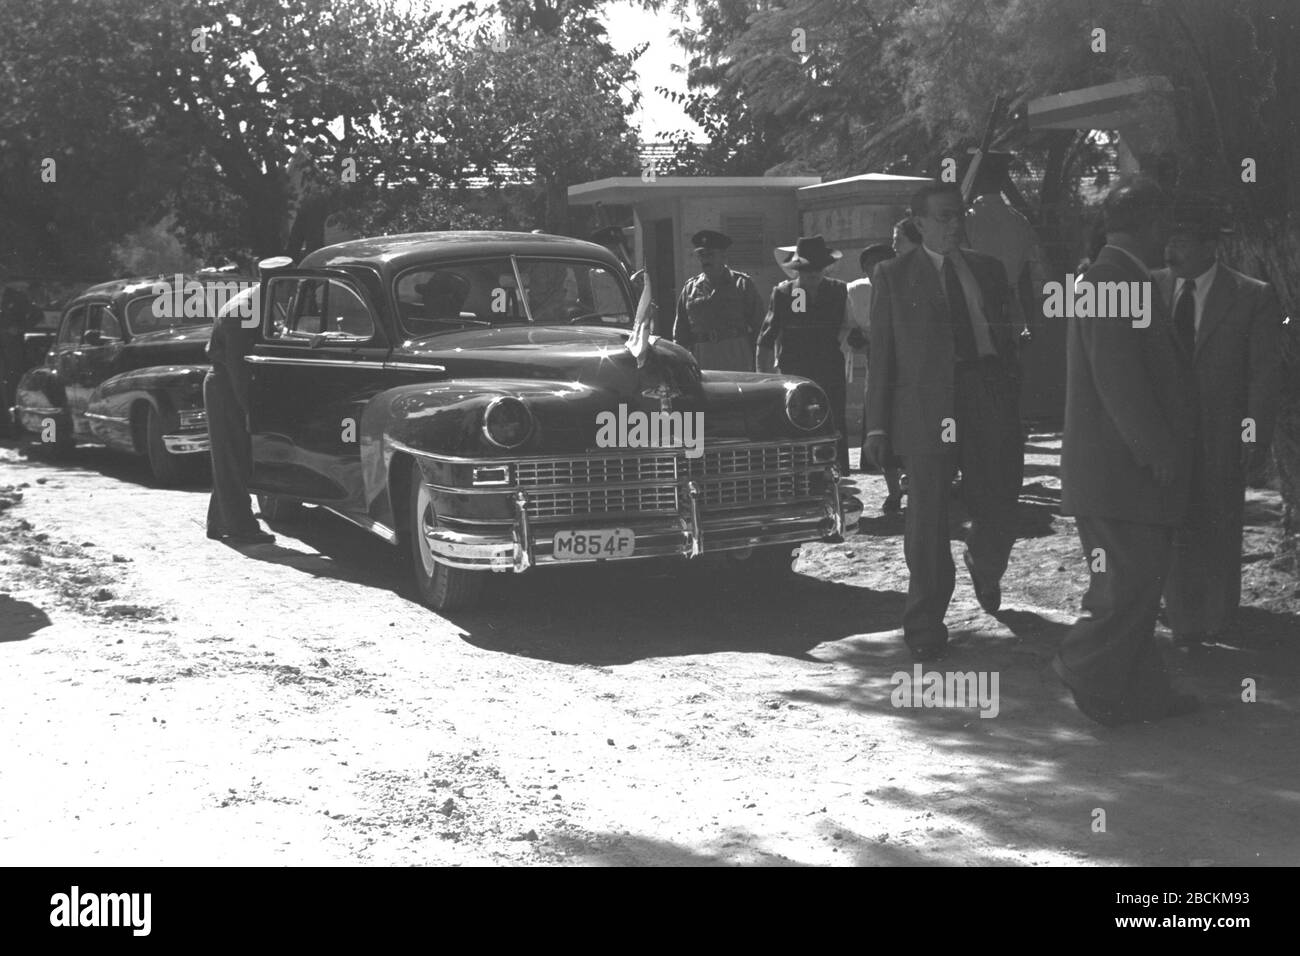 English President Chaim Weizmann S Car Arriving At Hakirya In Tel Aviv U O I O I C I C U C O E I U I O I O O O U I O U U U I O I U Ss O I E U E E O E 17 October 1944 This